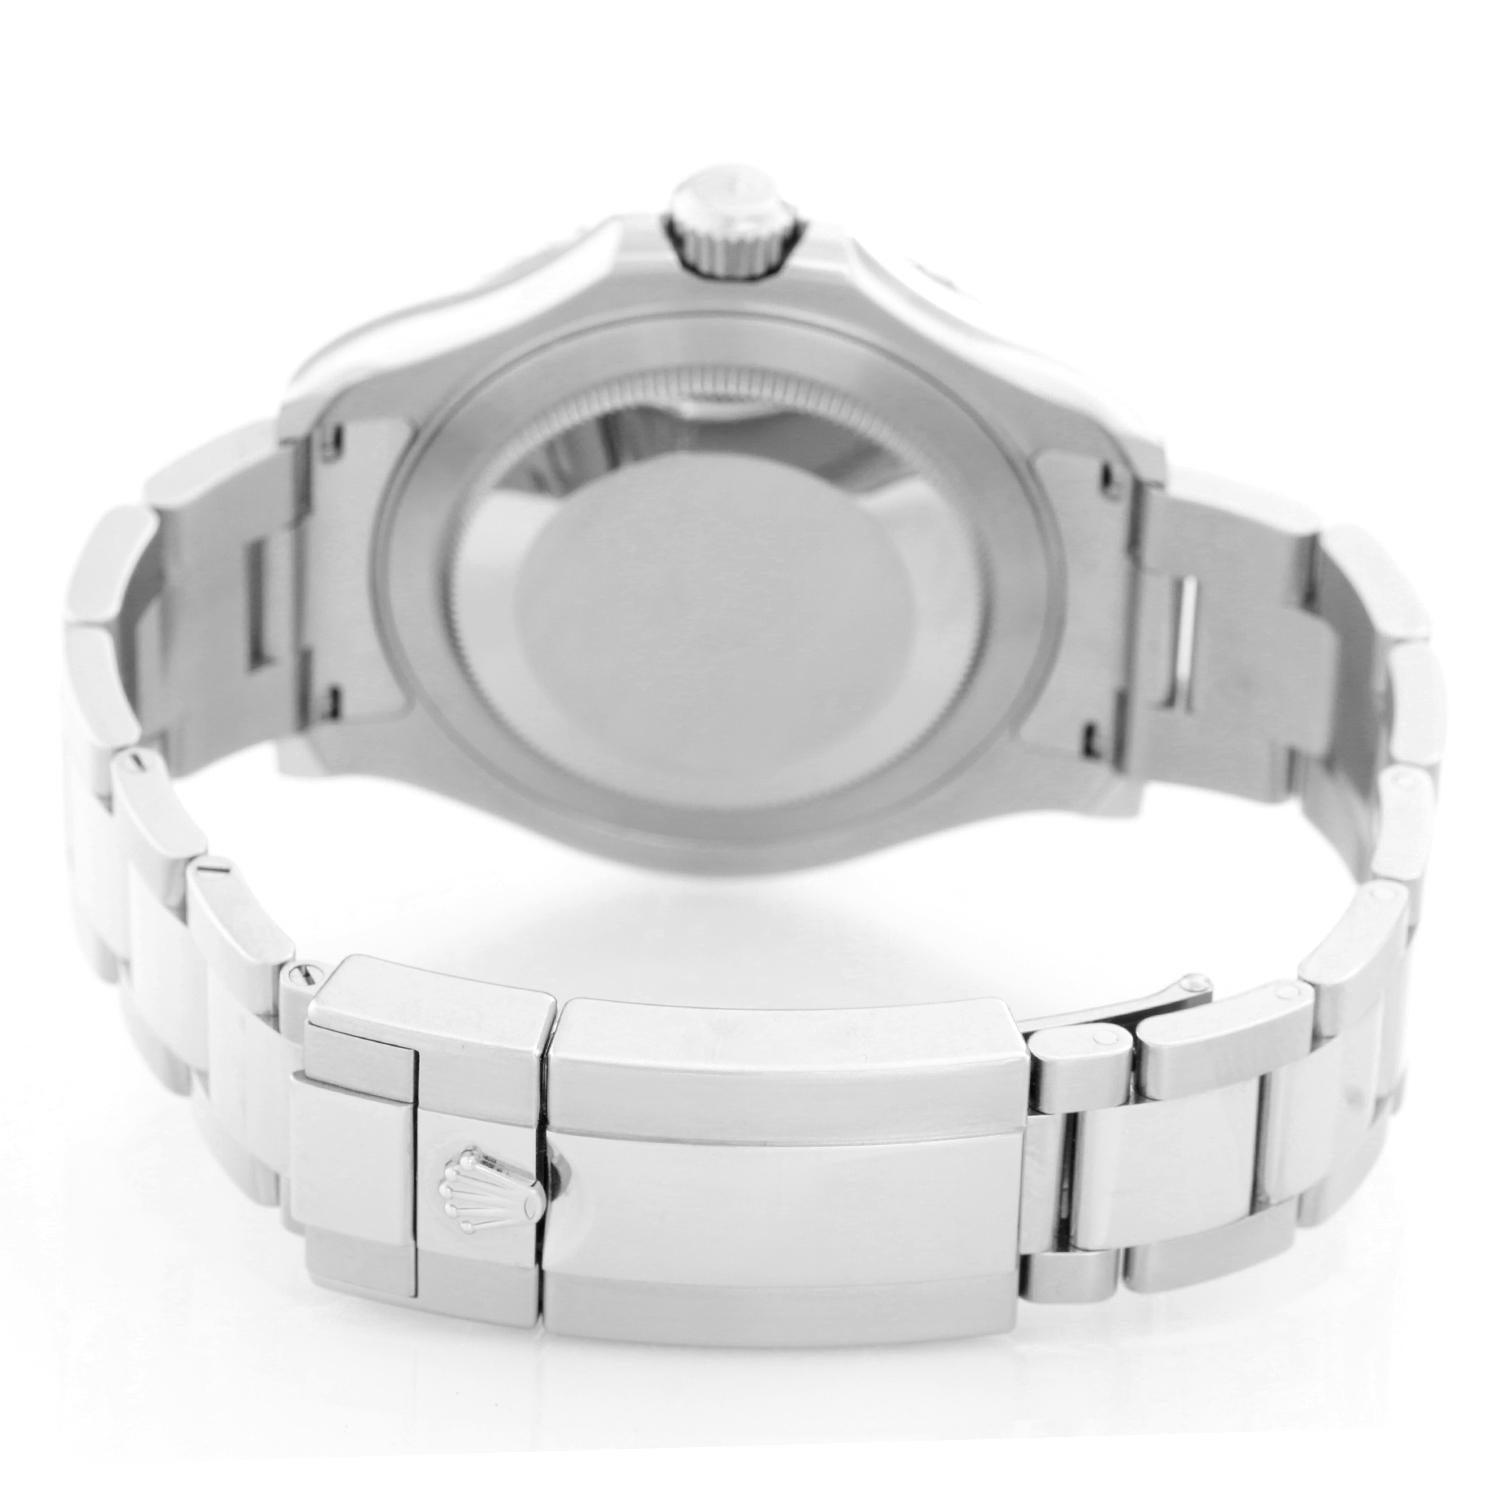 Rolex Stainless Steel Yacht-Master Automatic Wristwatch Ref 116622 1